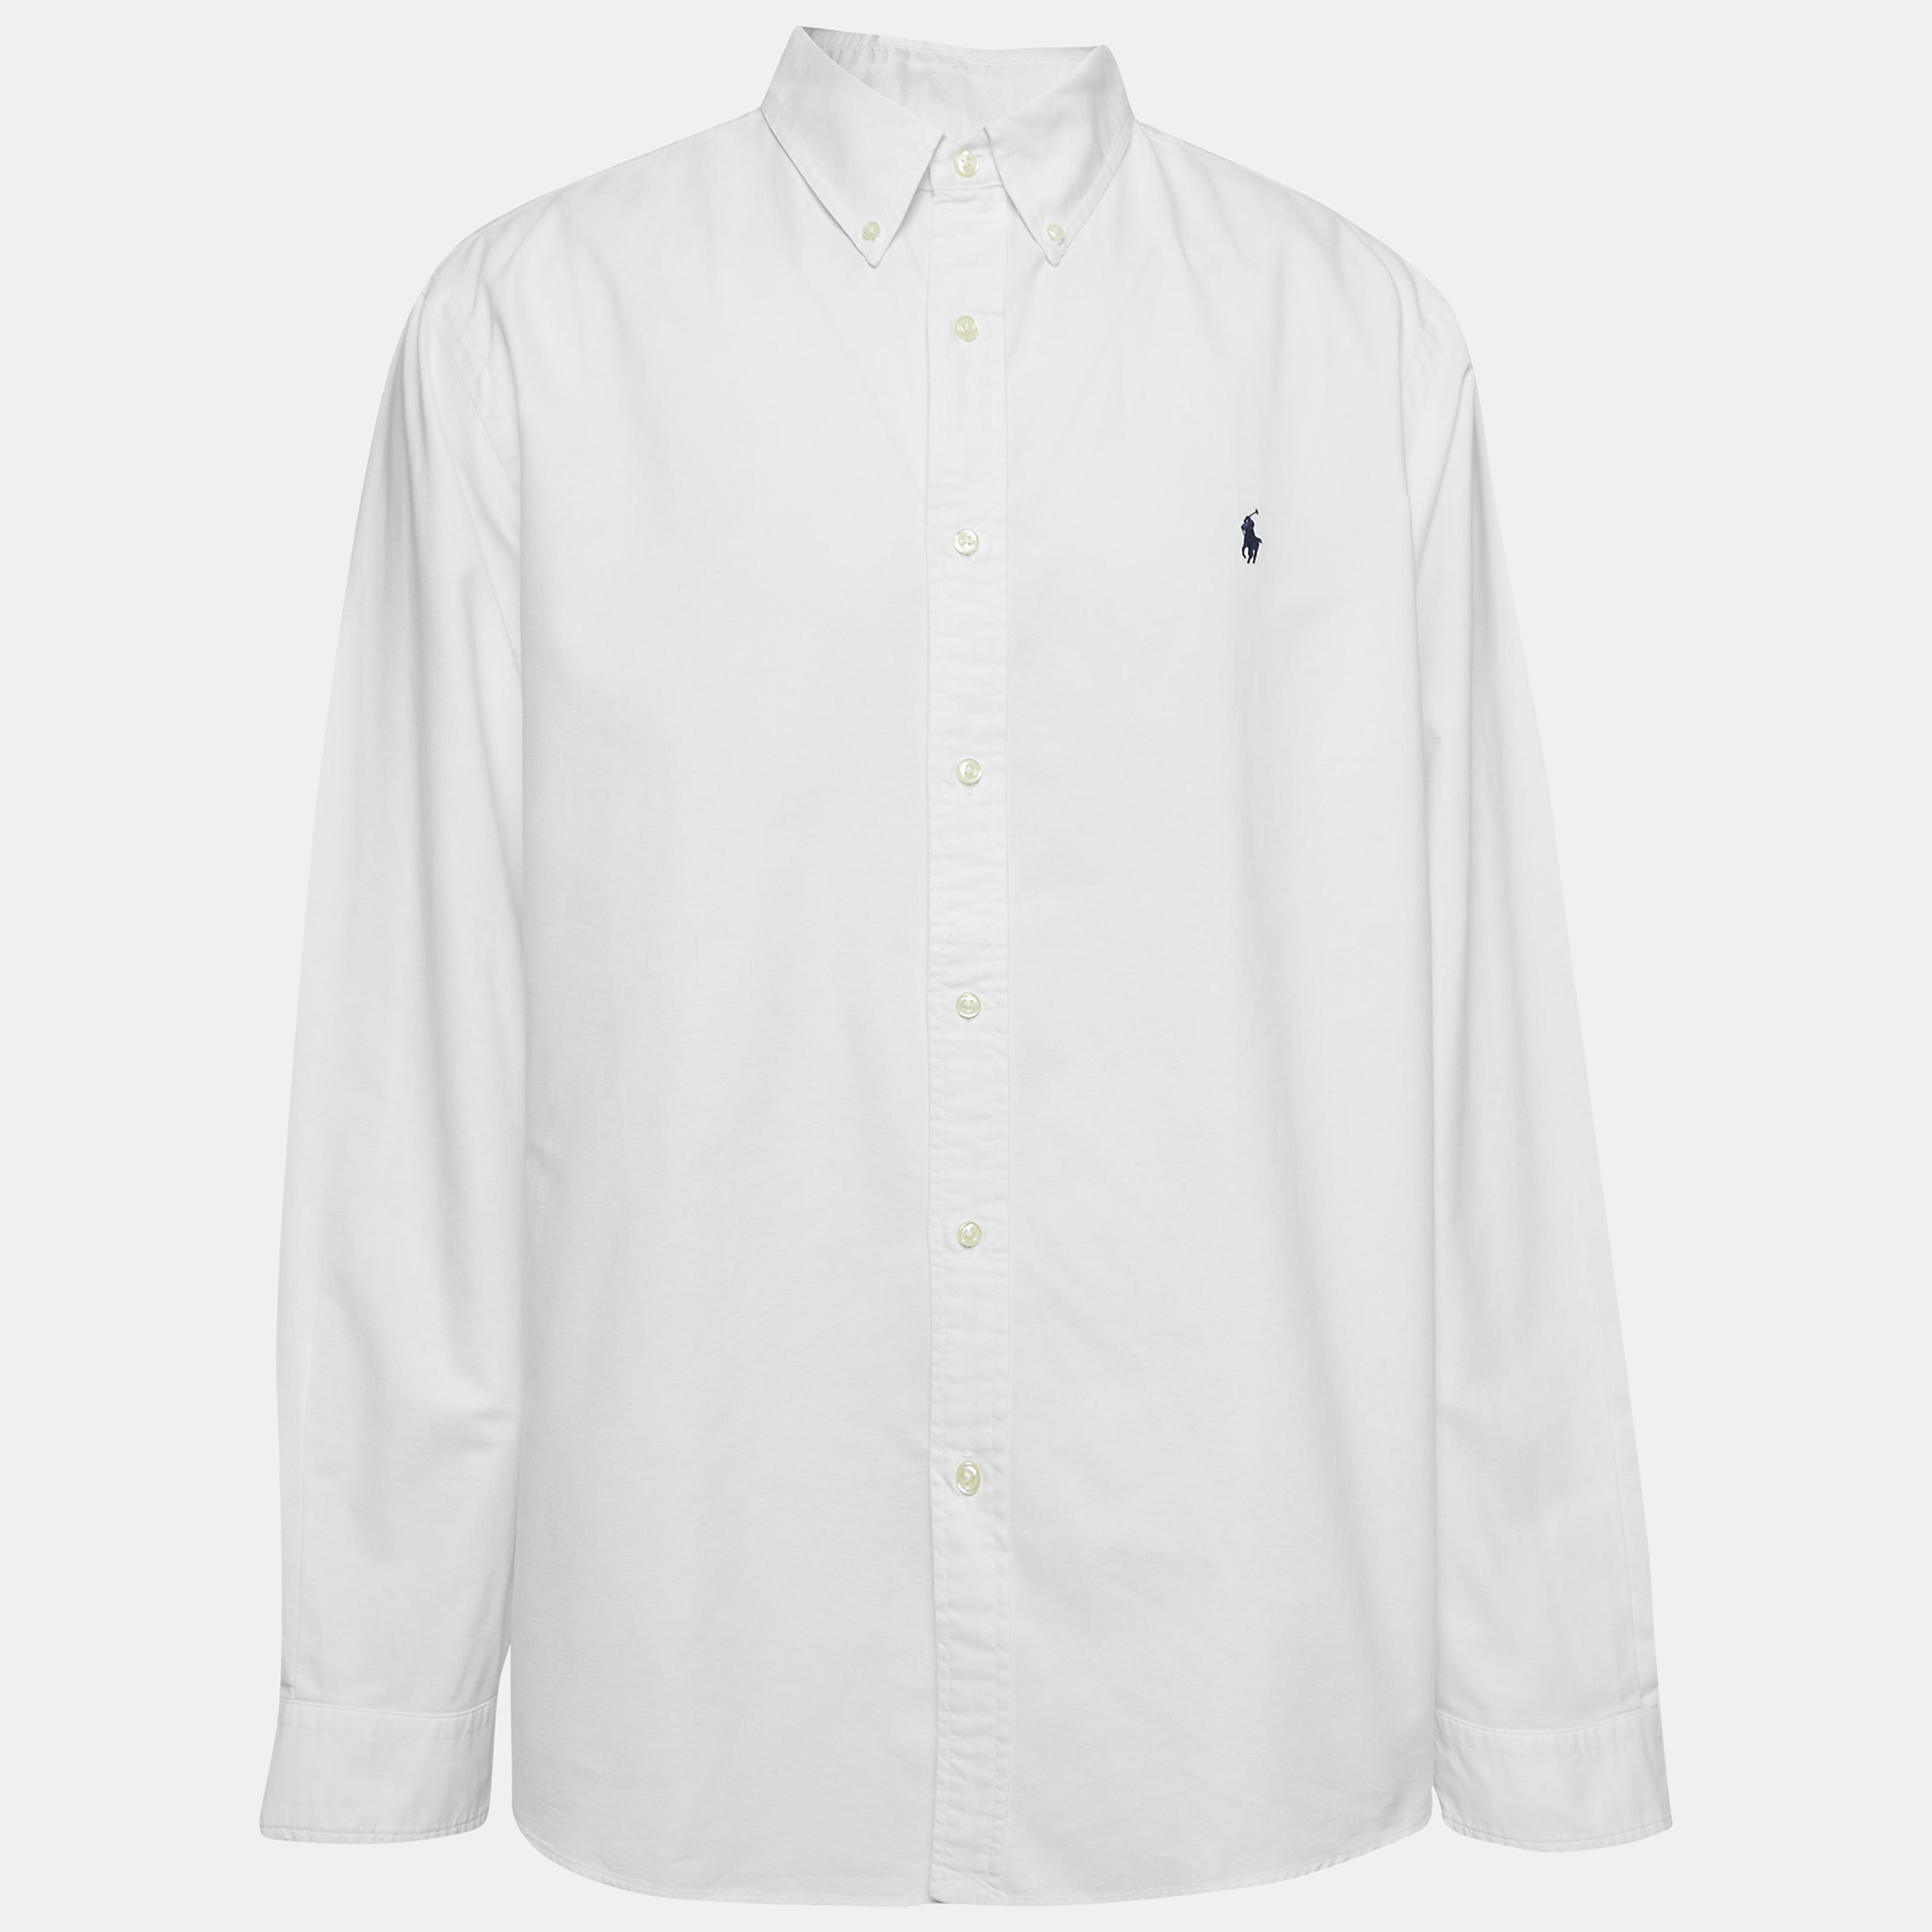 Ralph lauren white cotton custom fit shirt xxl